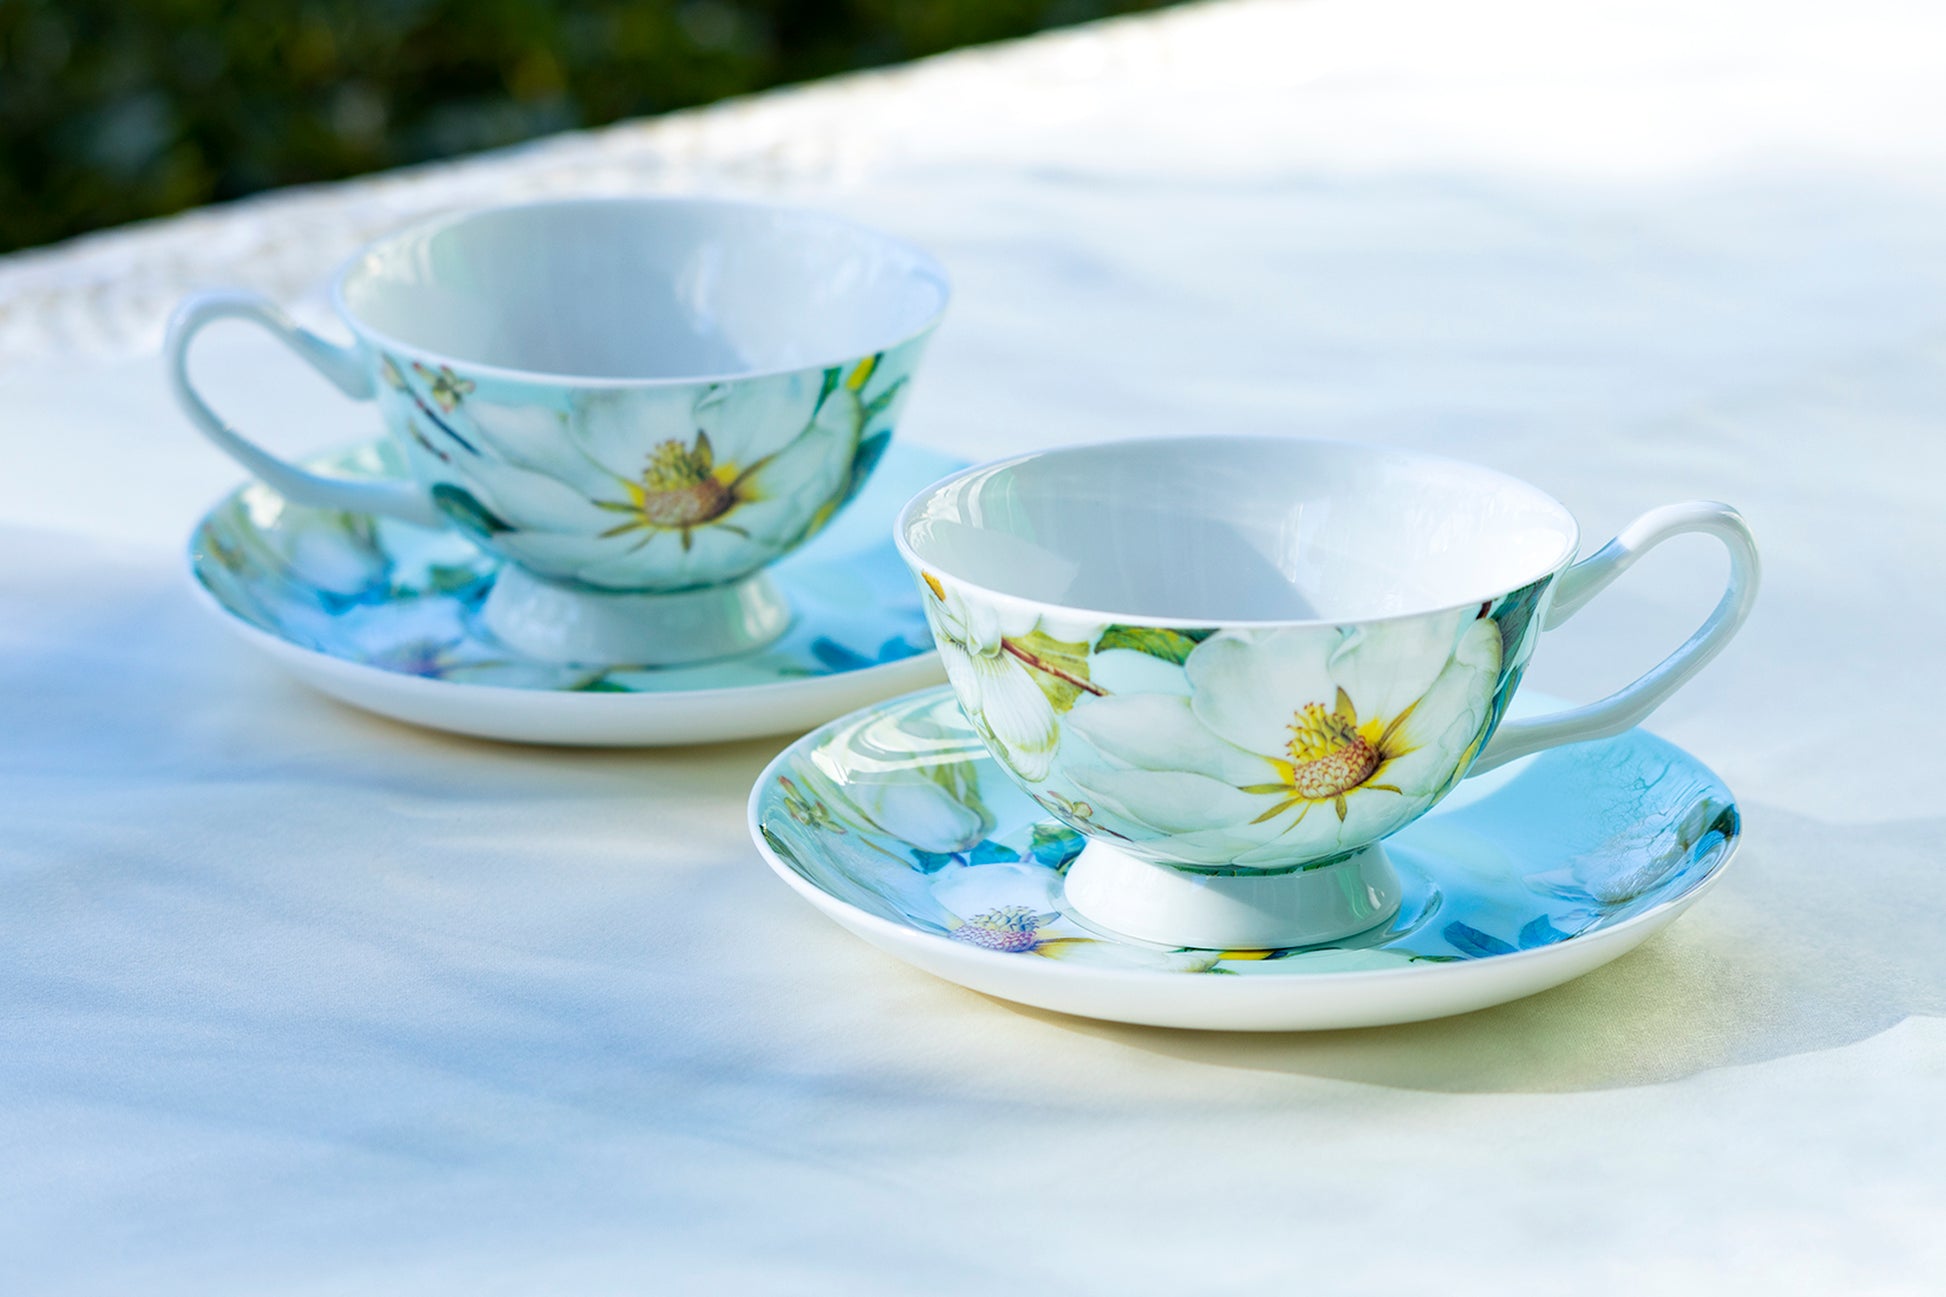 Magnolia Bone China Tea Cup and Saucer